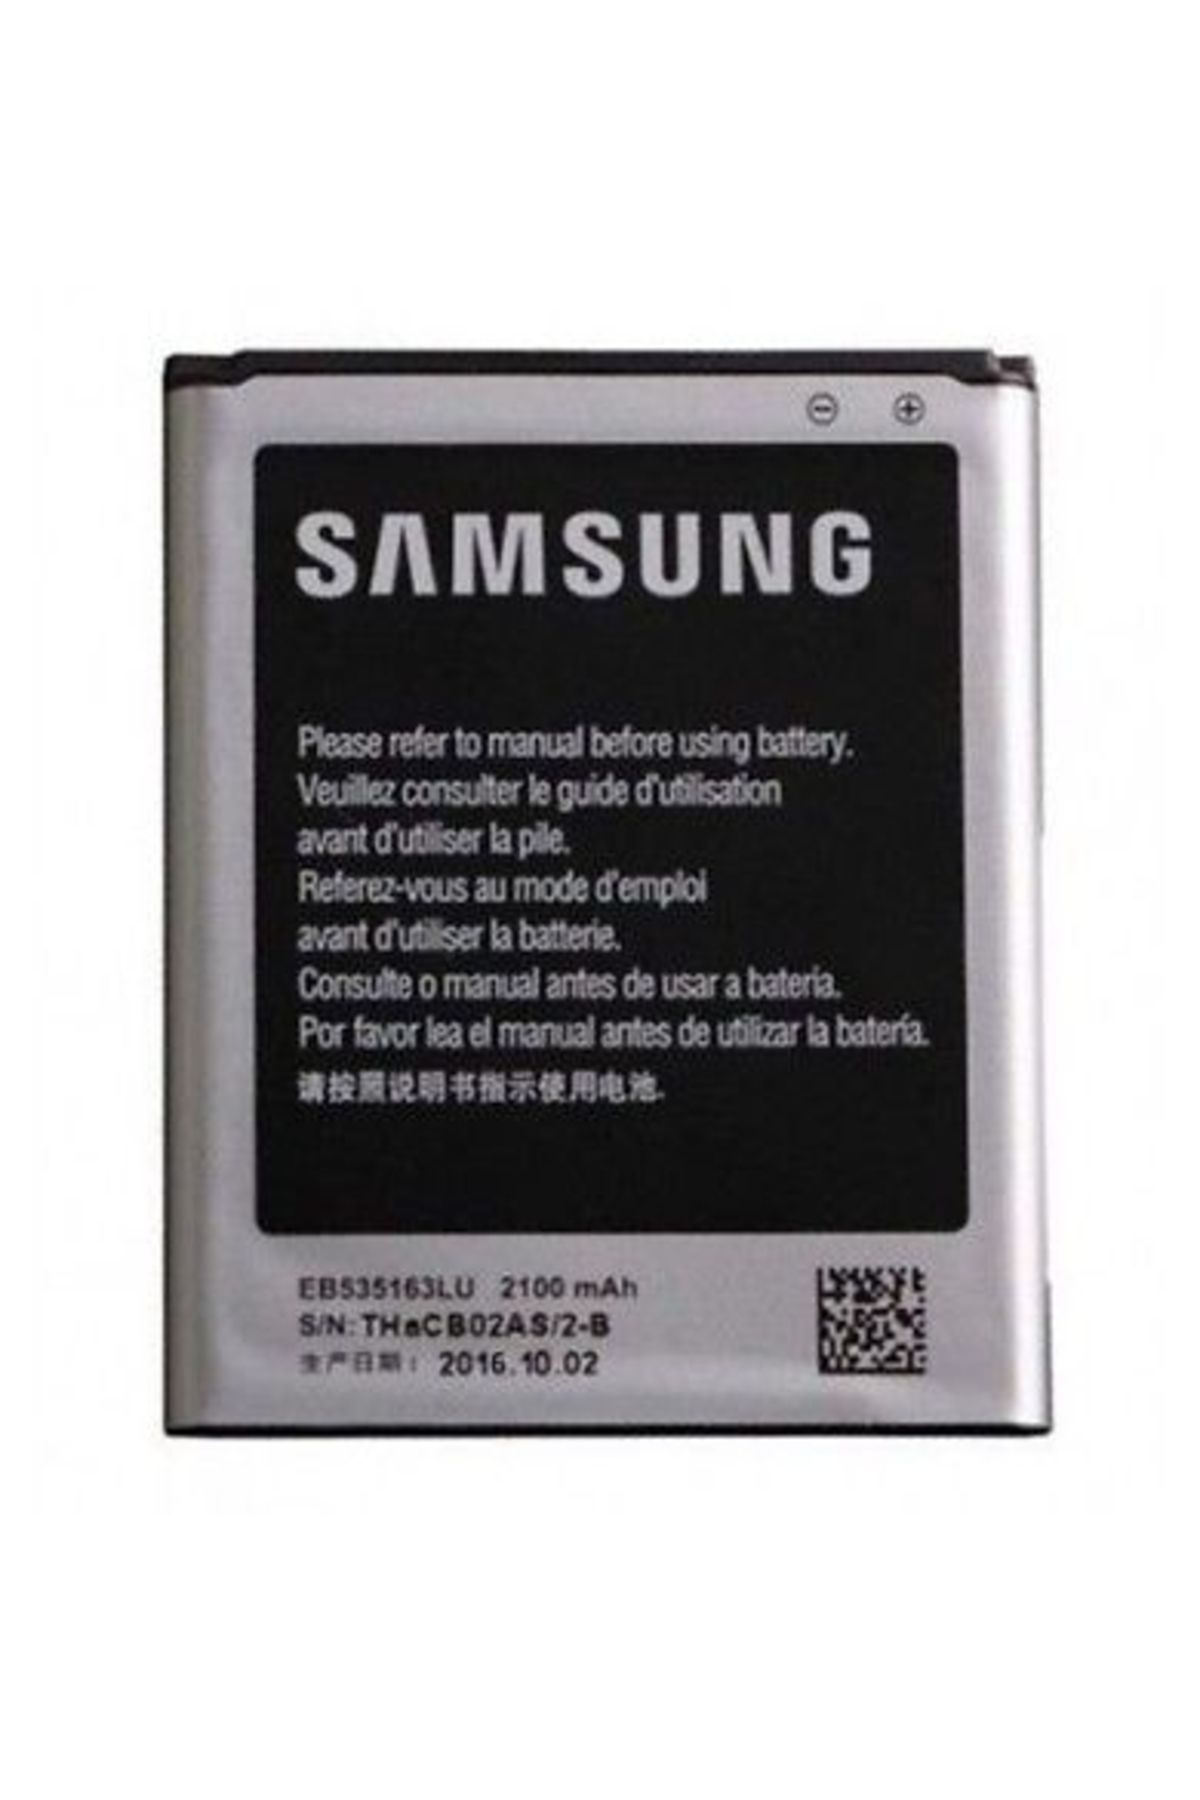 Basriko VORABELA Samsung Galaxy Grand Neo Sm i9060 Batarya Pil Eb 535163Lu